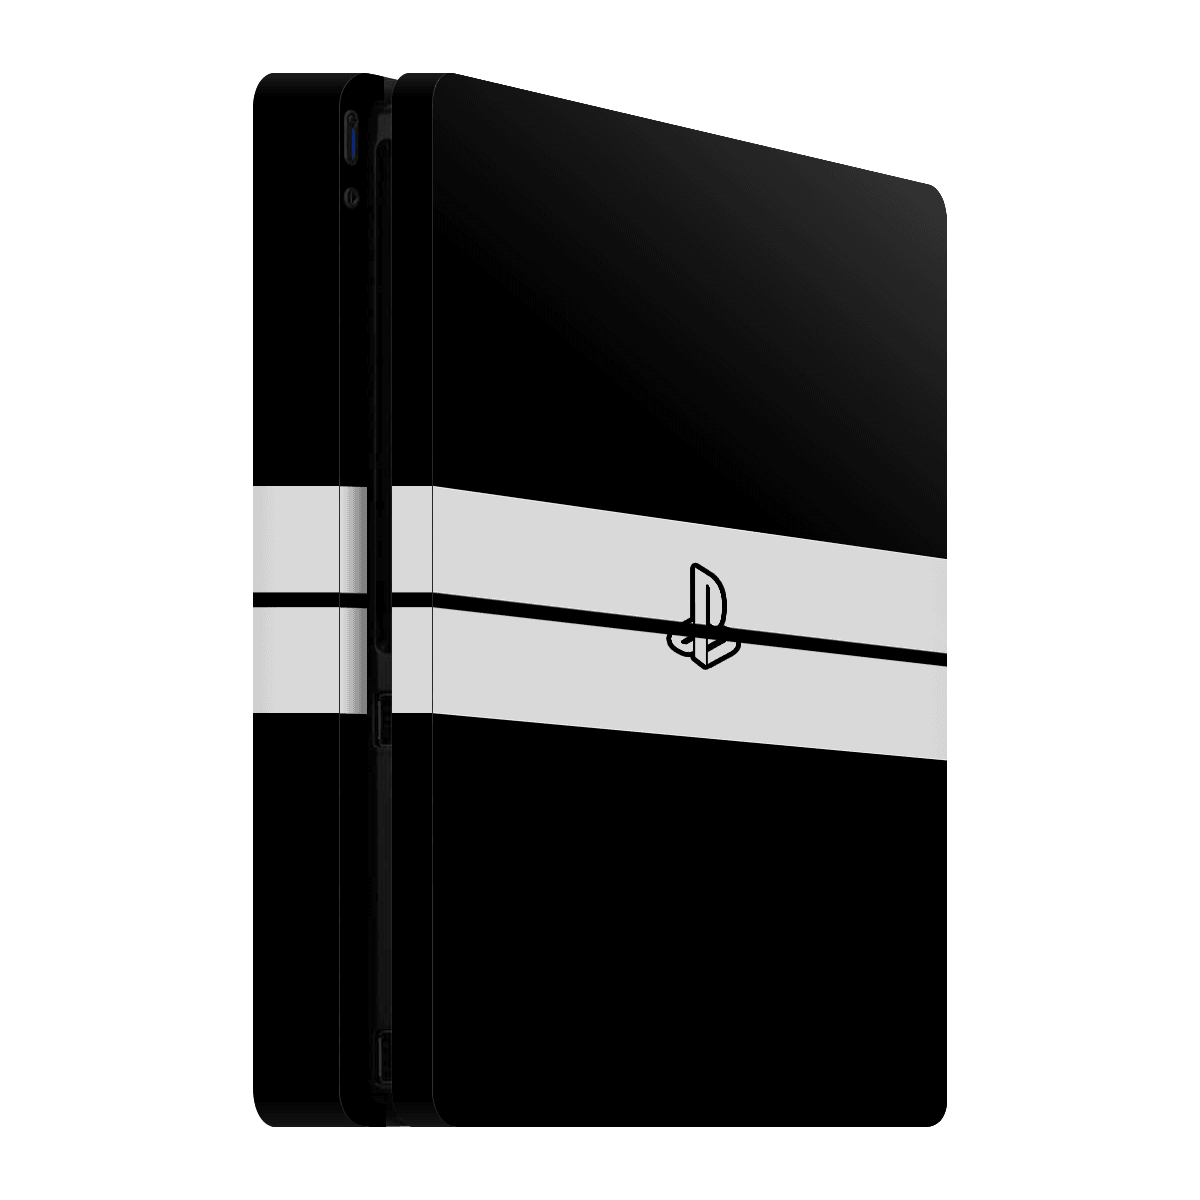 PlayStation 4 Slim Skin Two White Stripes on Black